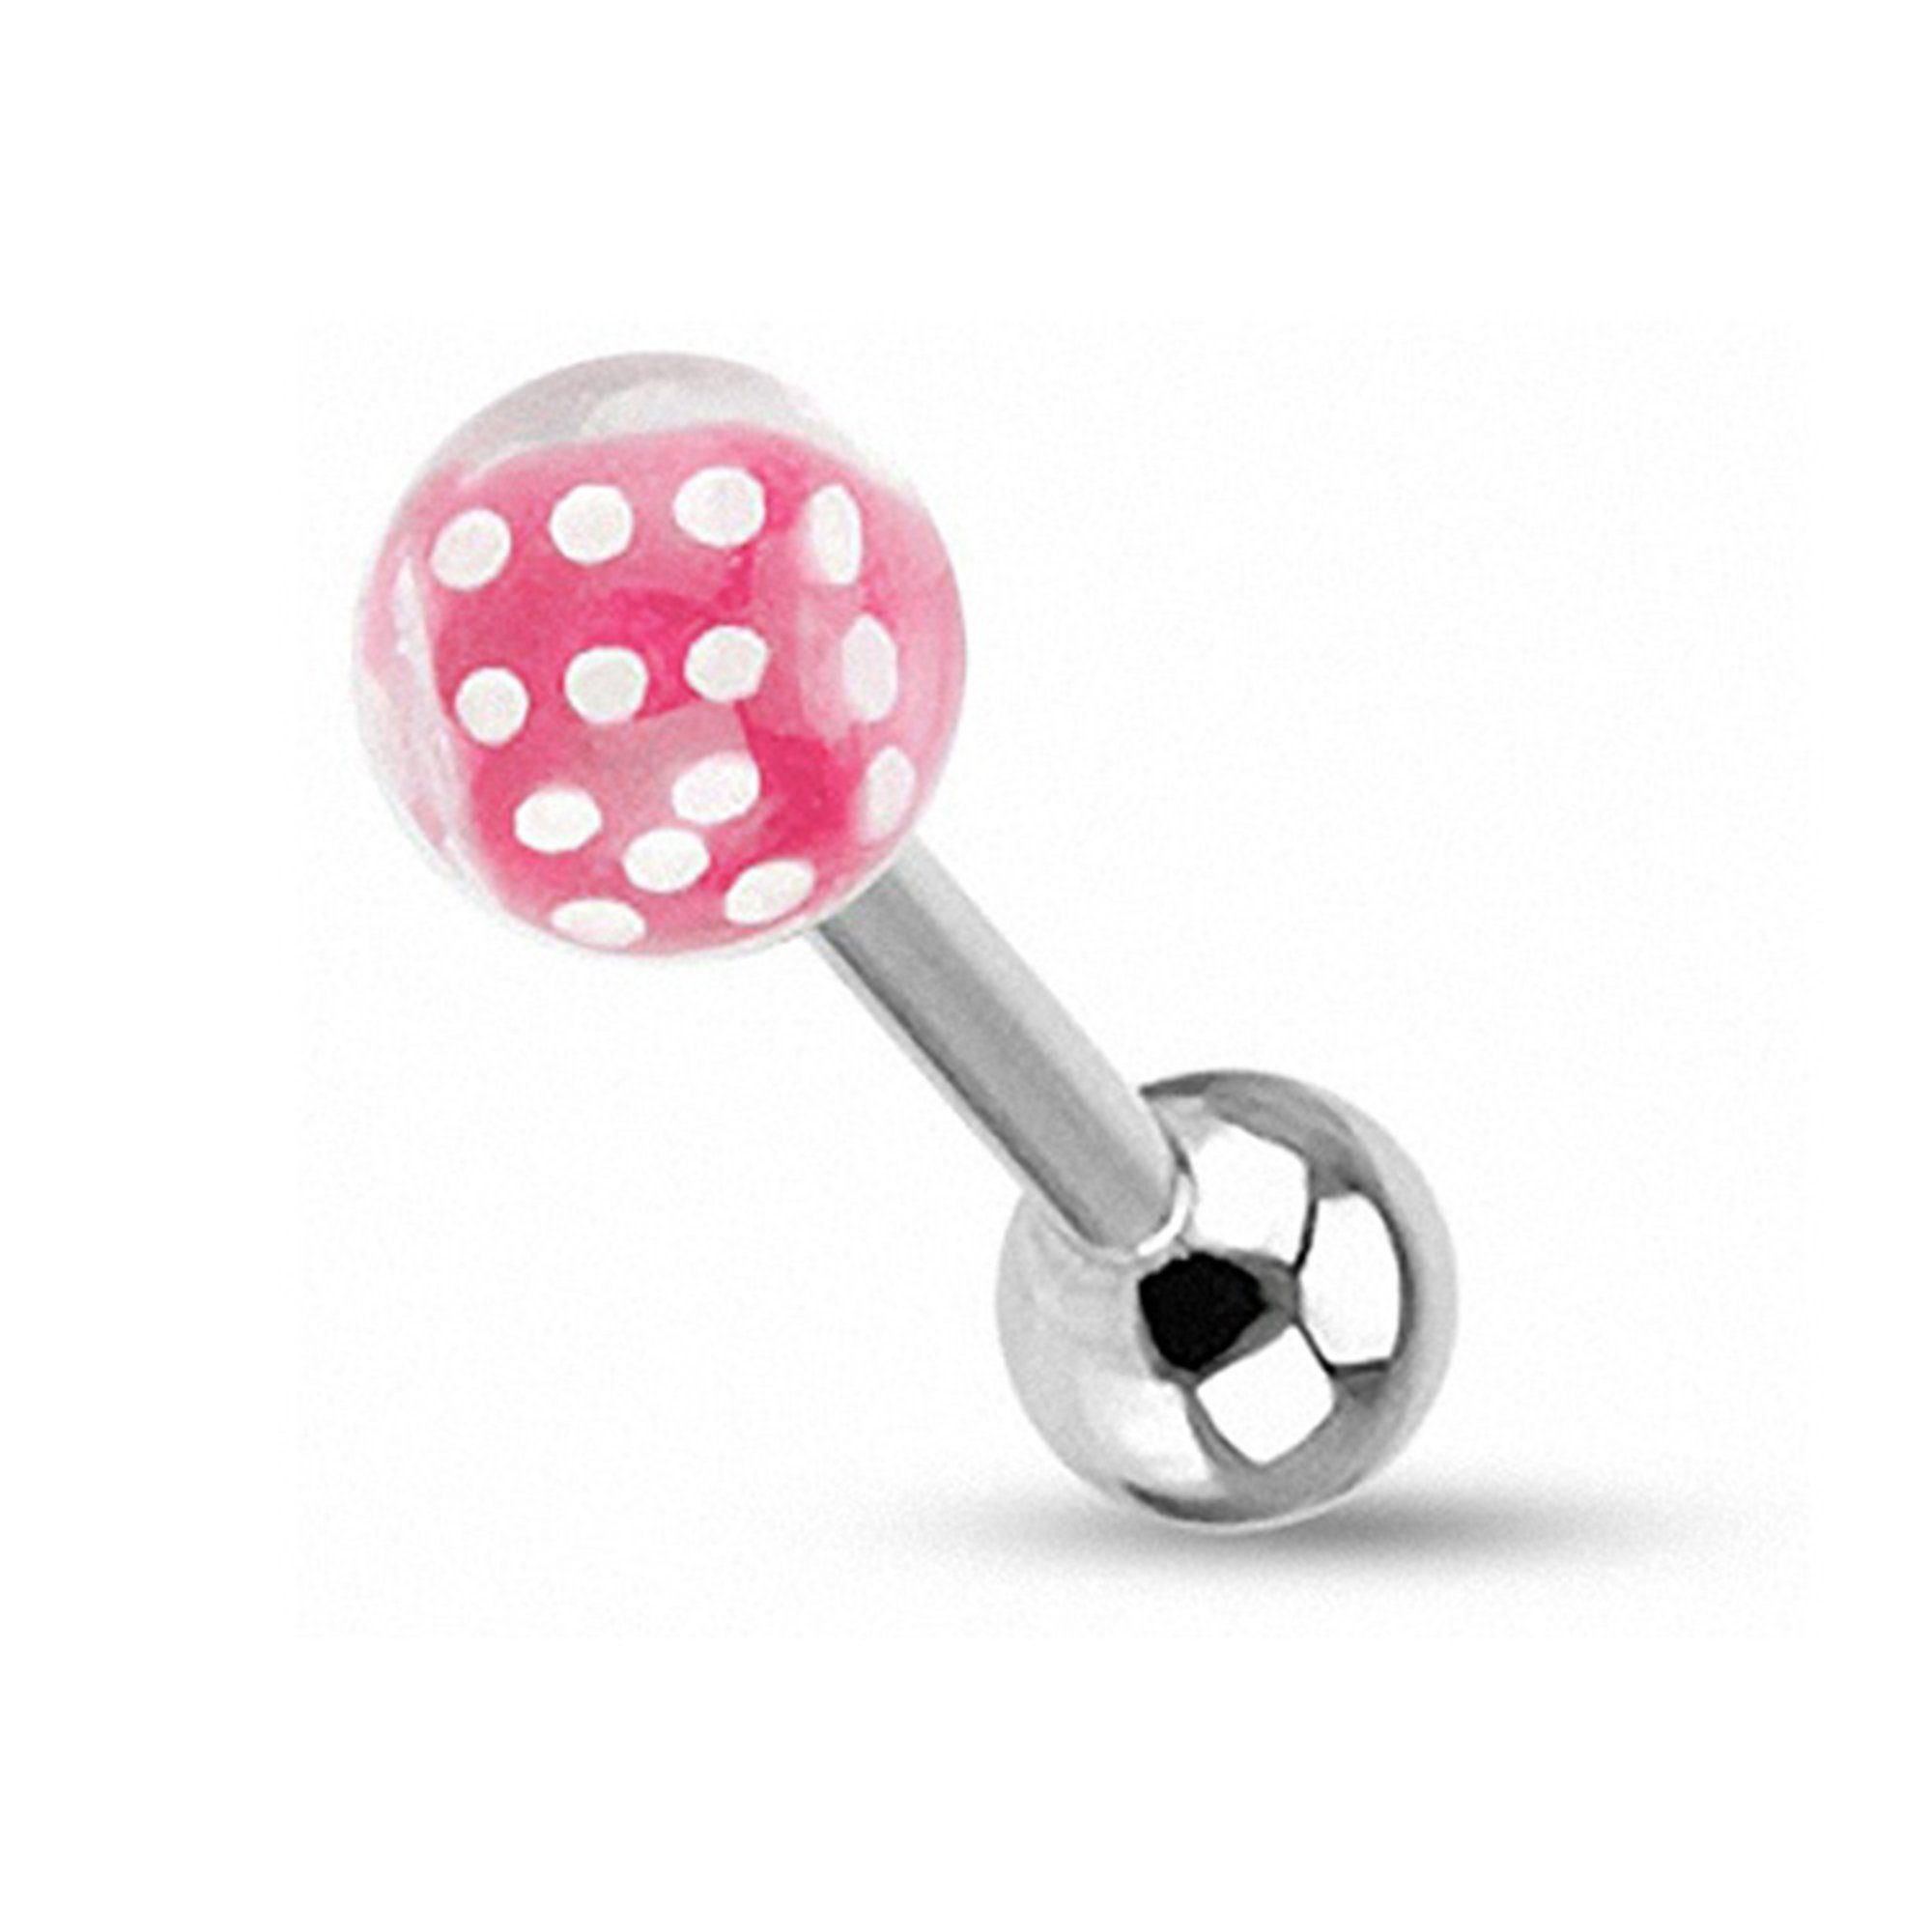 Taffstyle Piercing-Set Zungenpiercing Ohr Kugel Ball Würfel Inlay, Piercingfaktor Barbell Hantel Stecker Intim Brust Ohr Tragus Helix Pink